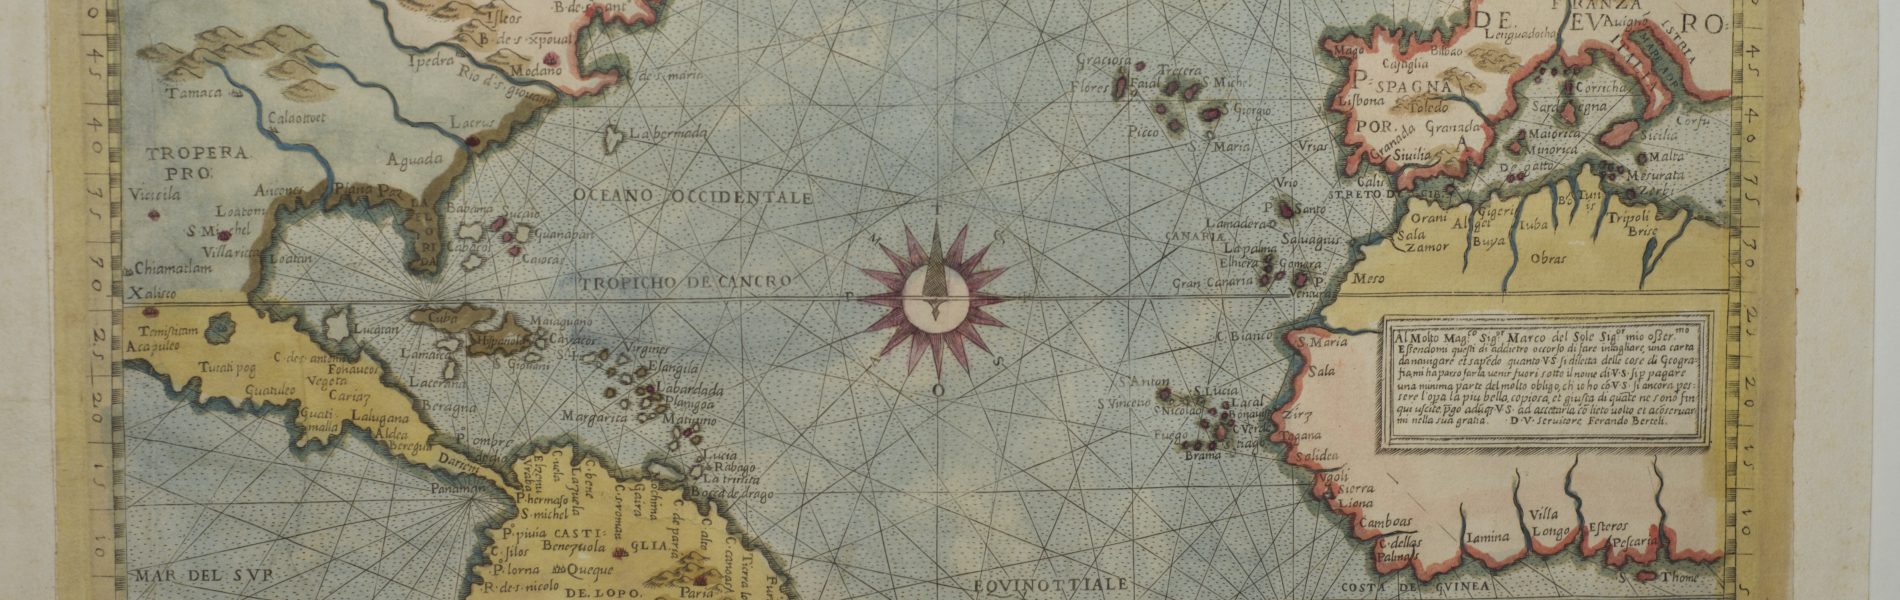 Mapa de América Central, 1590. Bartolomeu Lasso. Museo Marítimo de Róterdam (WAE898-G)